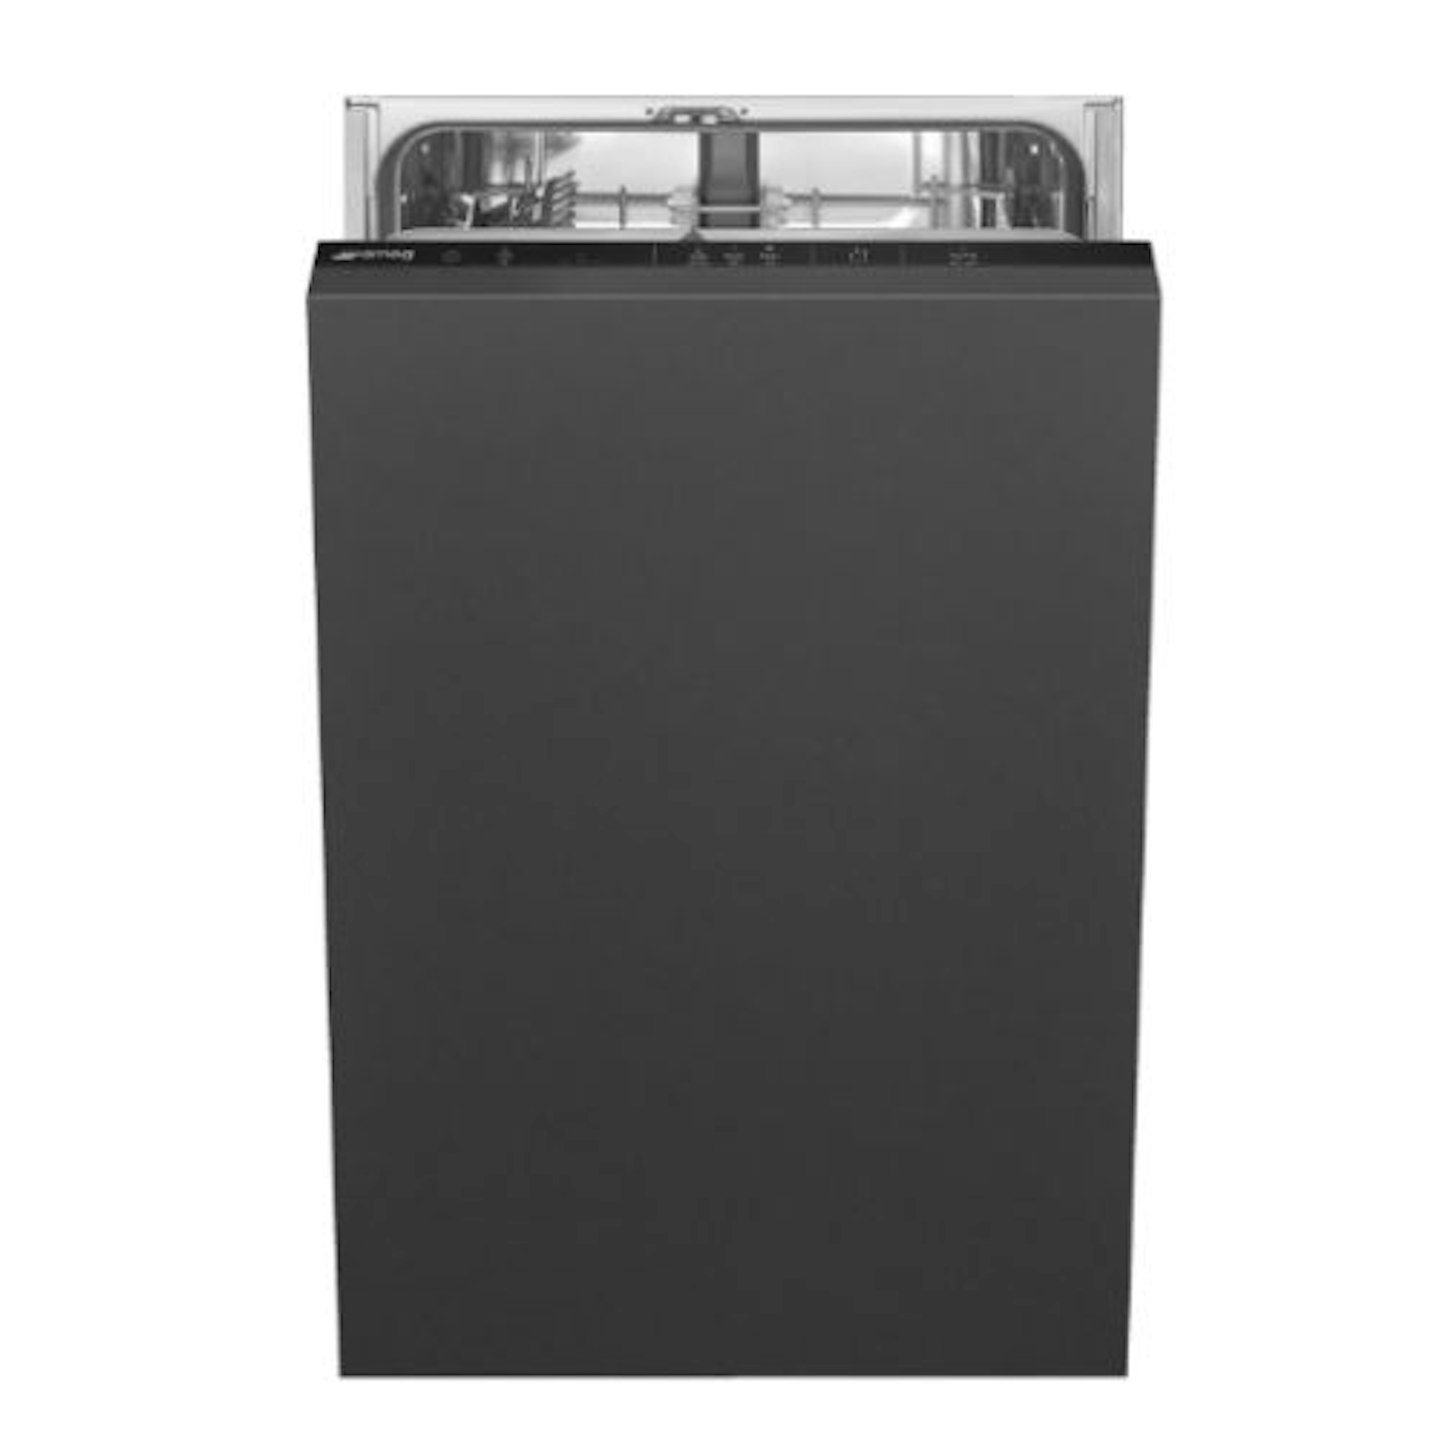 Smeg DI4522 Fully Integrated Slimline Dishwasher